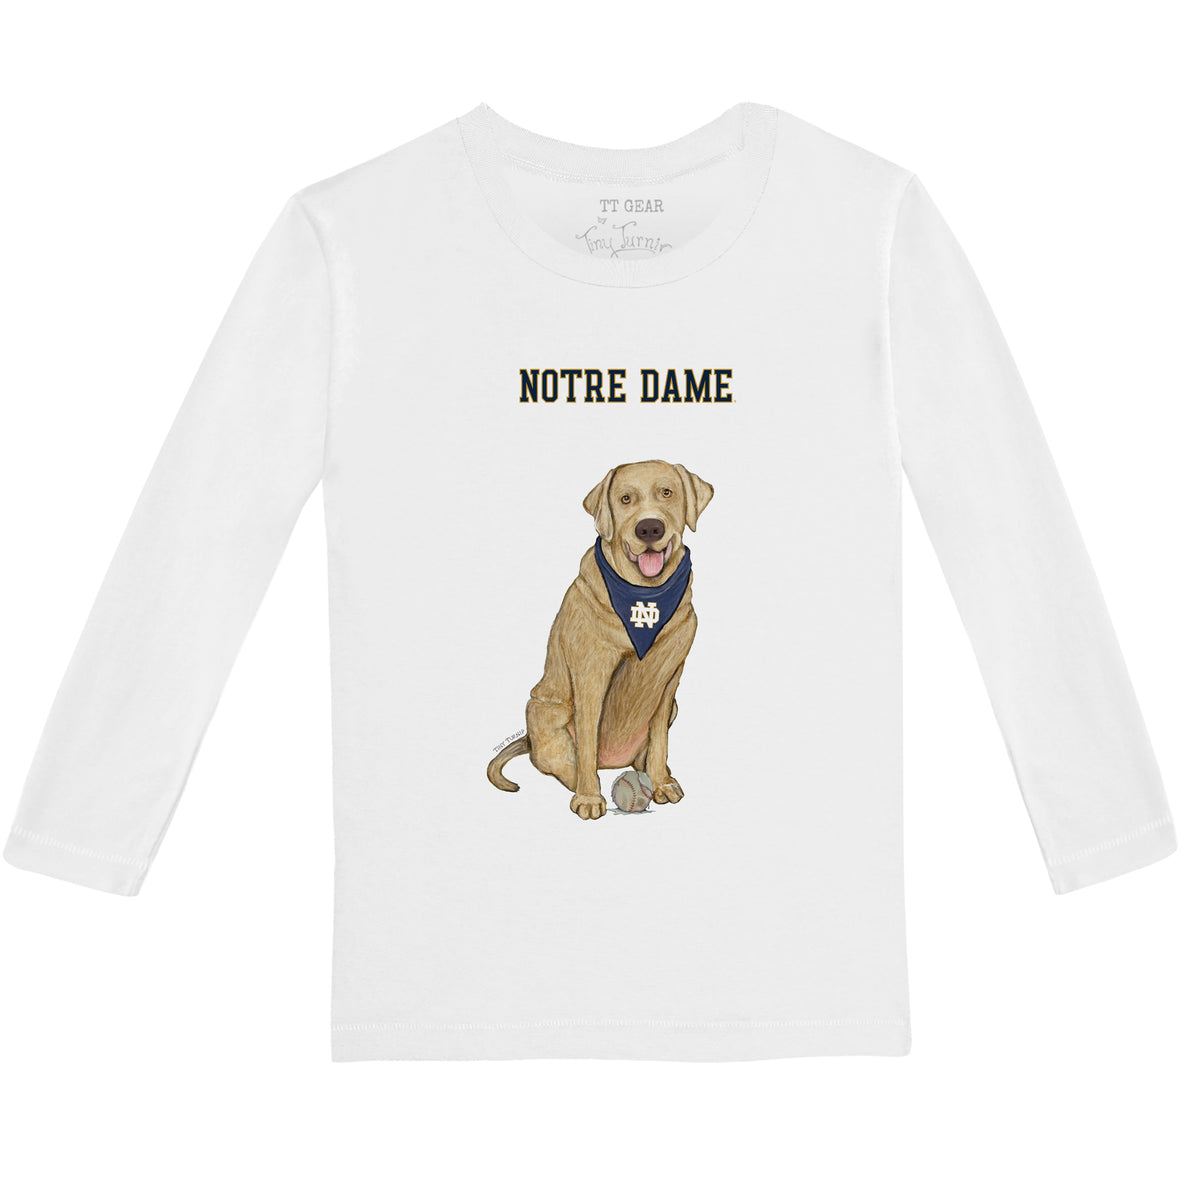 Notre Dame Fighting Irish Yellow Labrador Retriever Long-Sleeve Tee Shirt